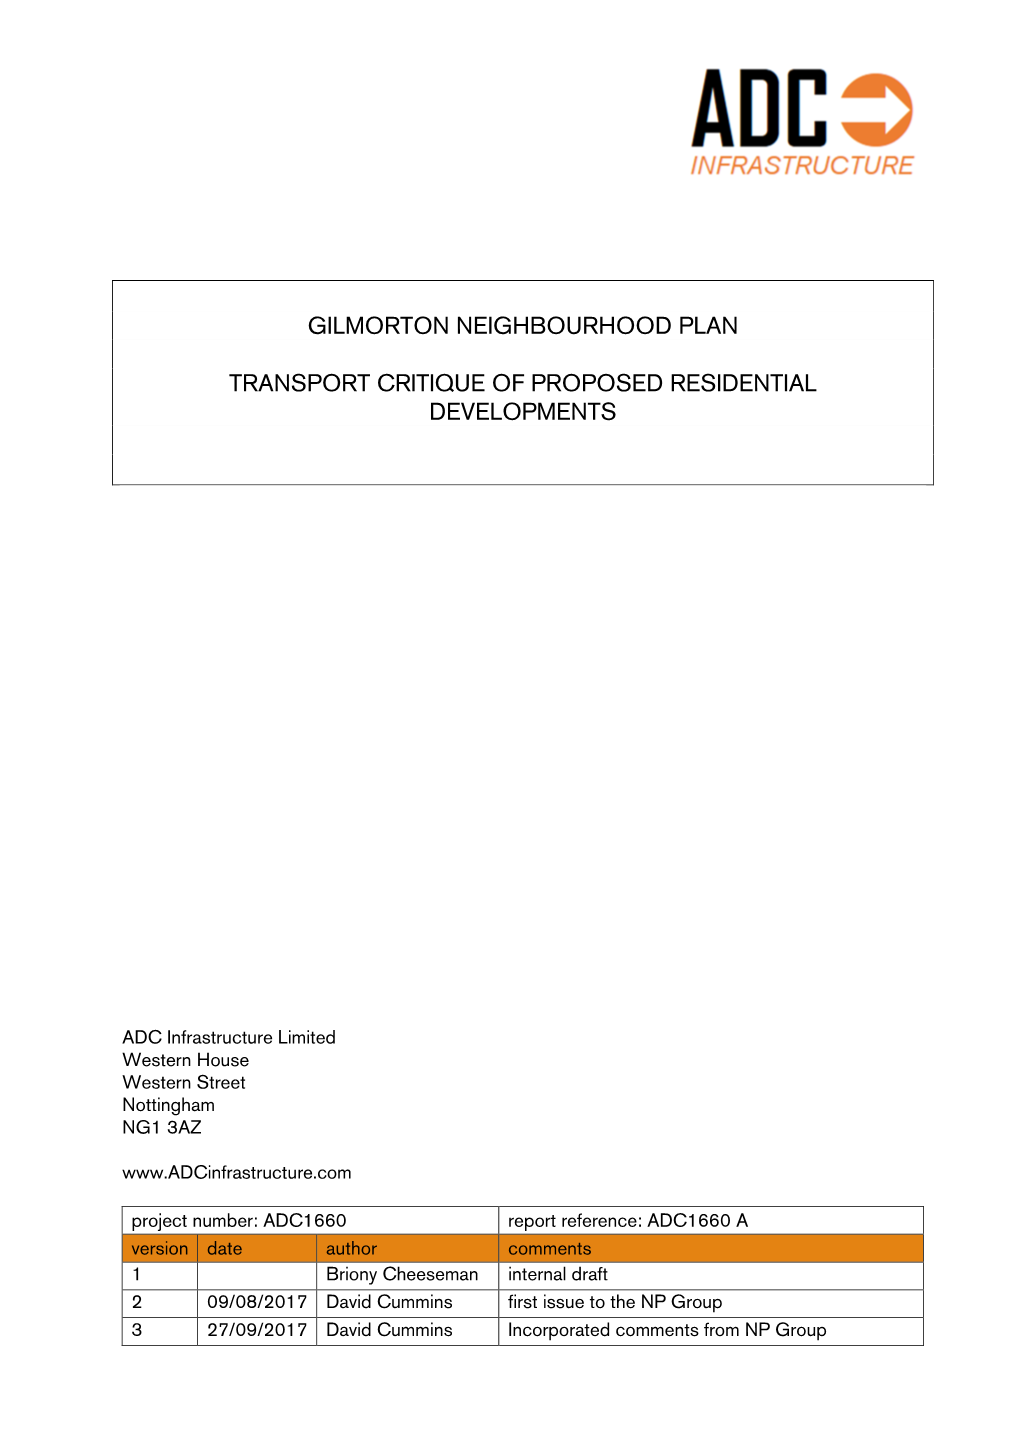 Gilmorton Neighbourhood Plan Transport Critique Of